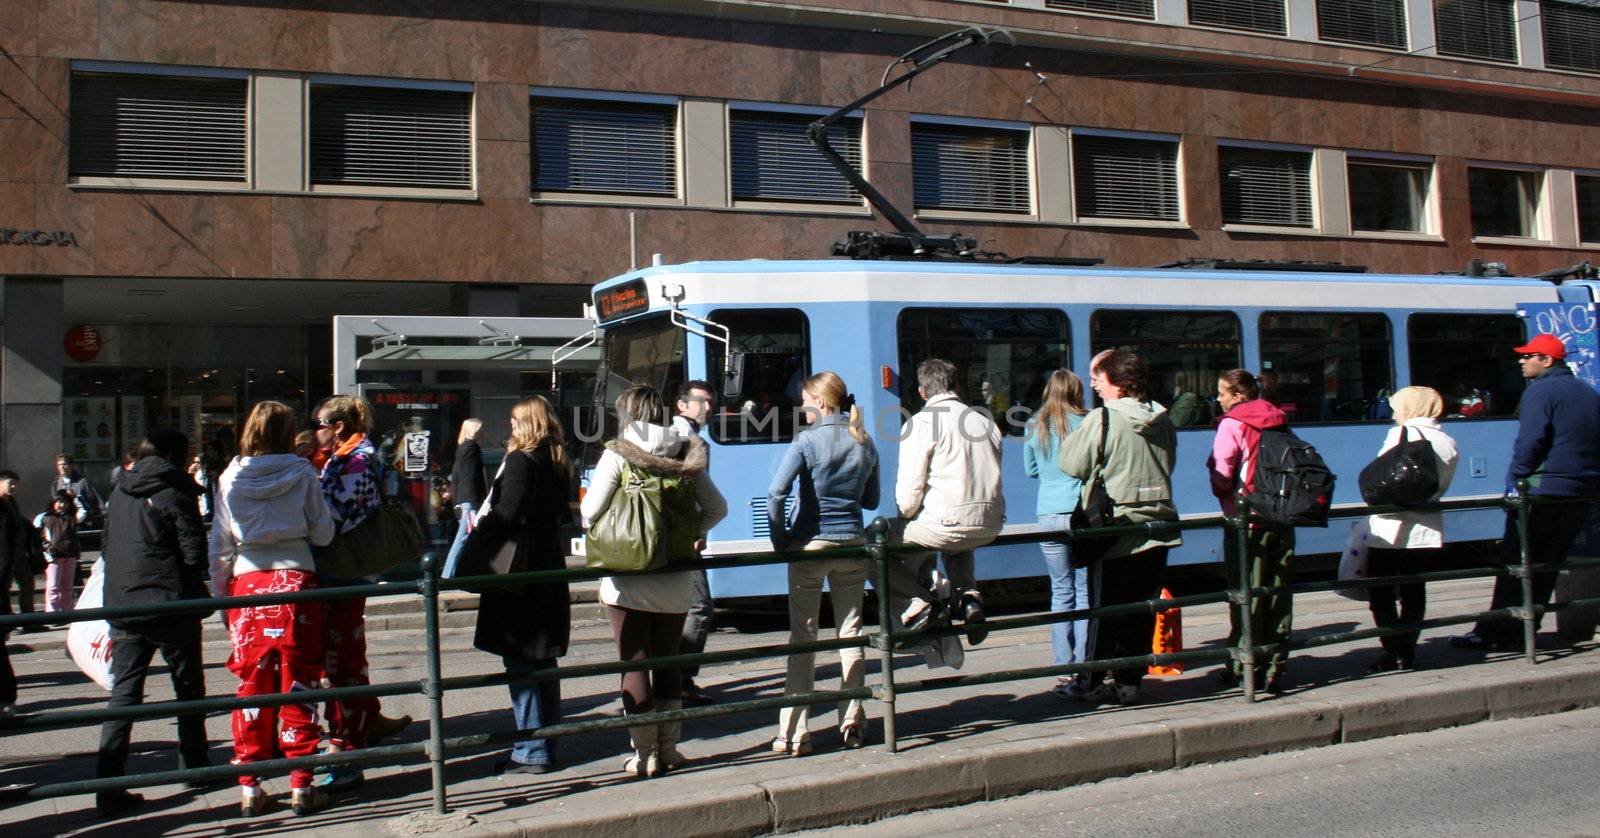 People waiting for the bus, public transportation, Storgata, Oslo. 